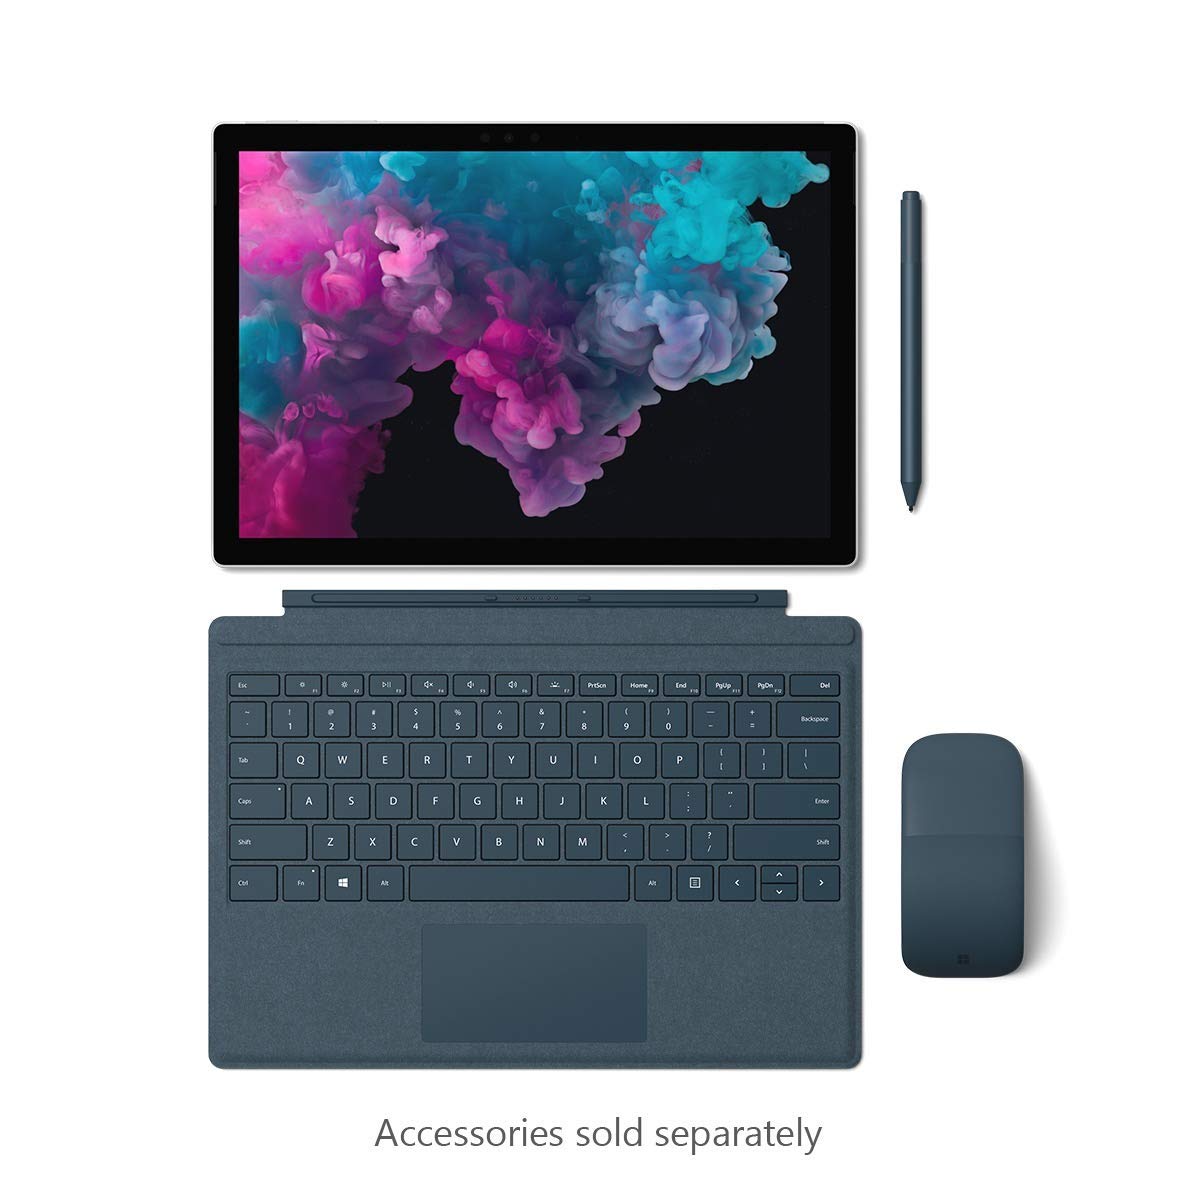 Microsoft Surface Pro 6 (Intel Core i5, 8GB RAM, 128GB) - Newest Version, Platinum